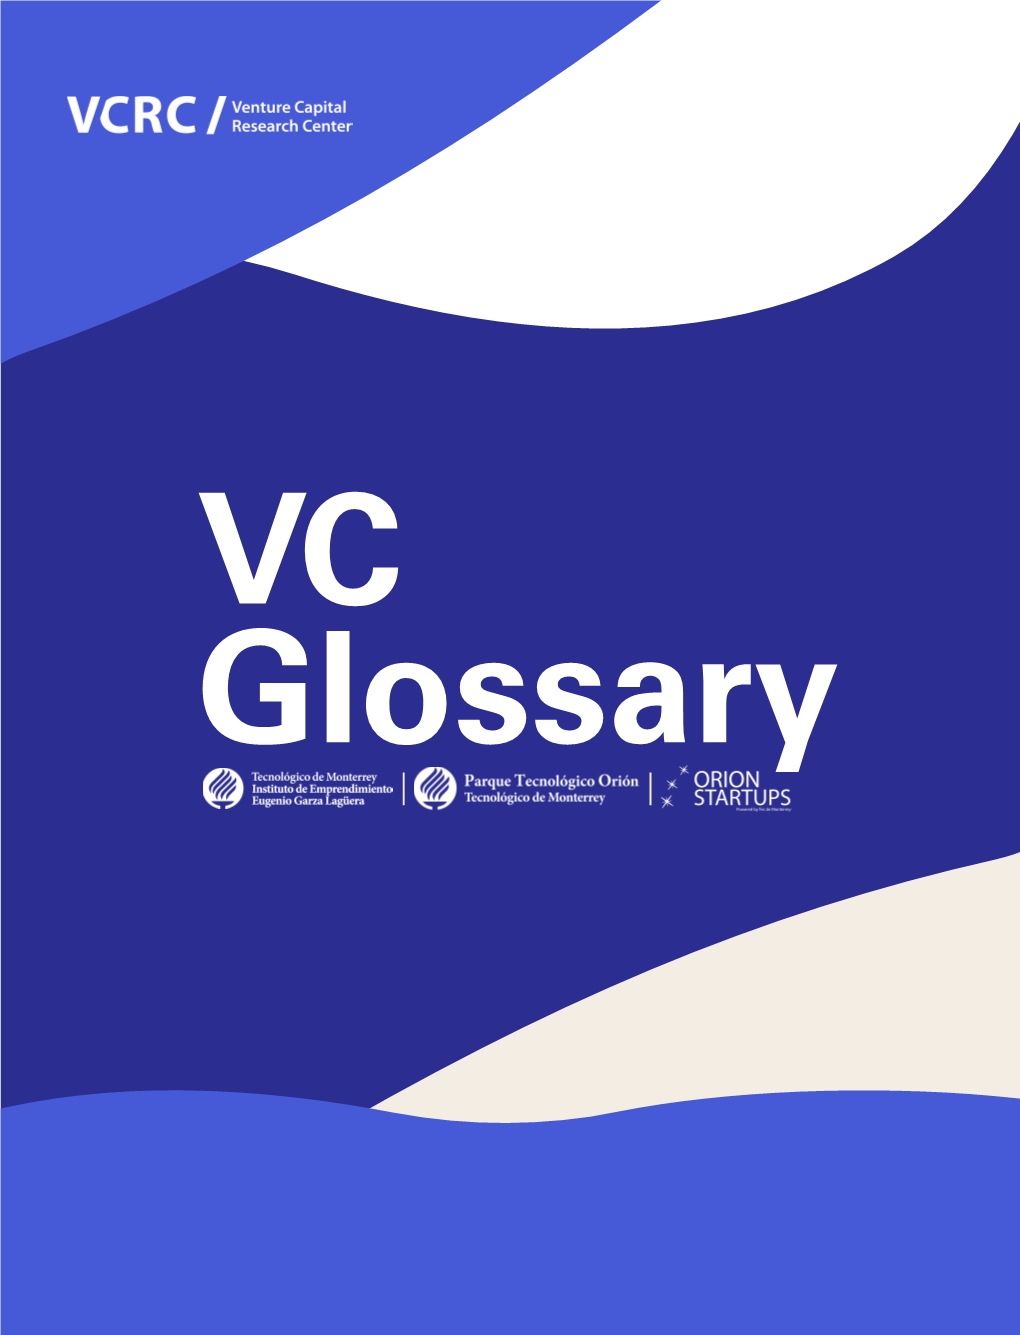 VC Glossary Index VC Glossary .⁄⁄⁄⁄⁄⁄⁄⁄⁄⁄⁄⁄⁄⁄⁄⁄⁄..⁄..3